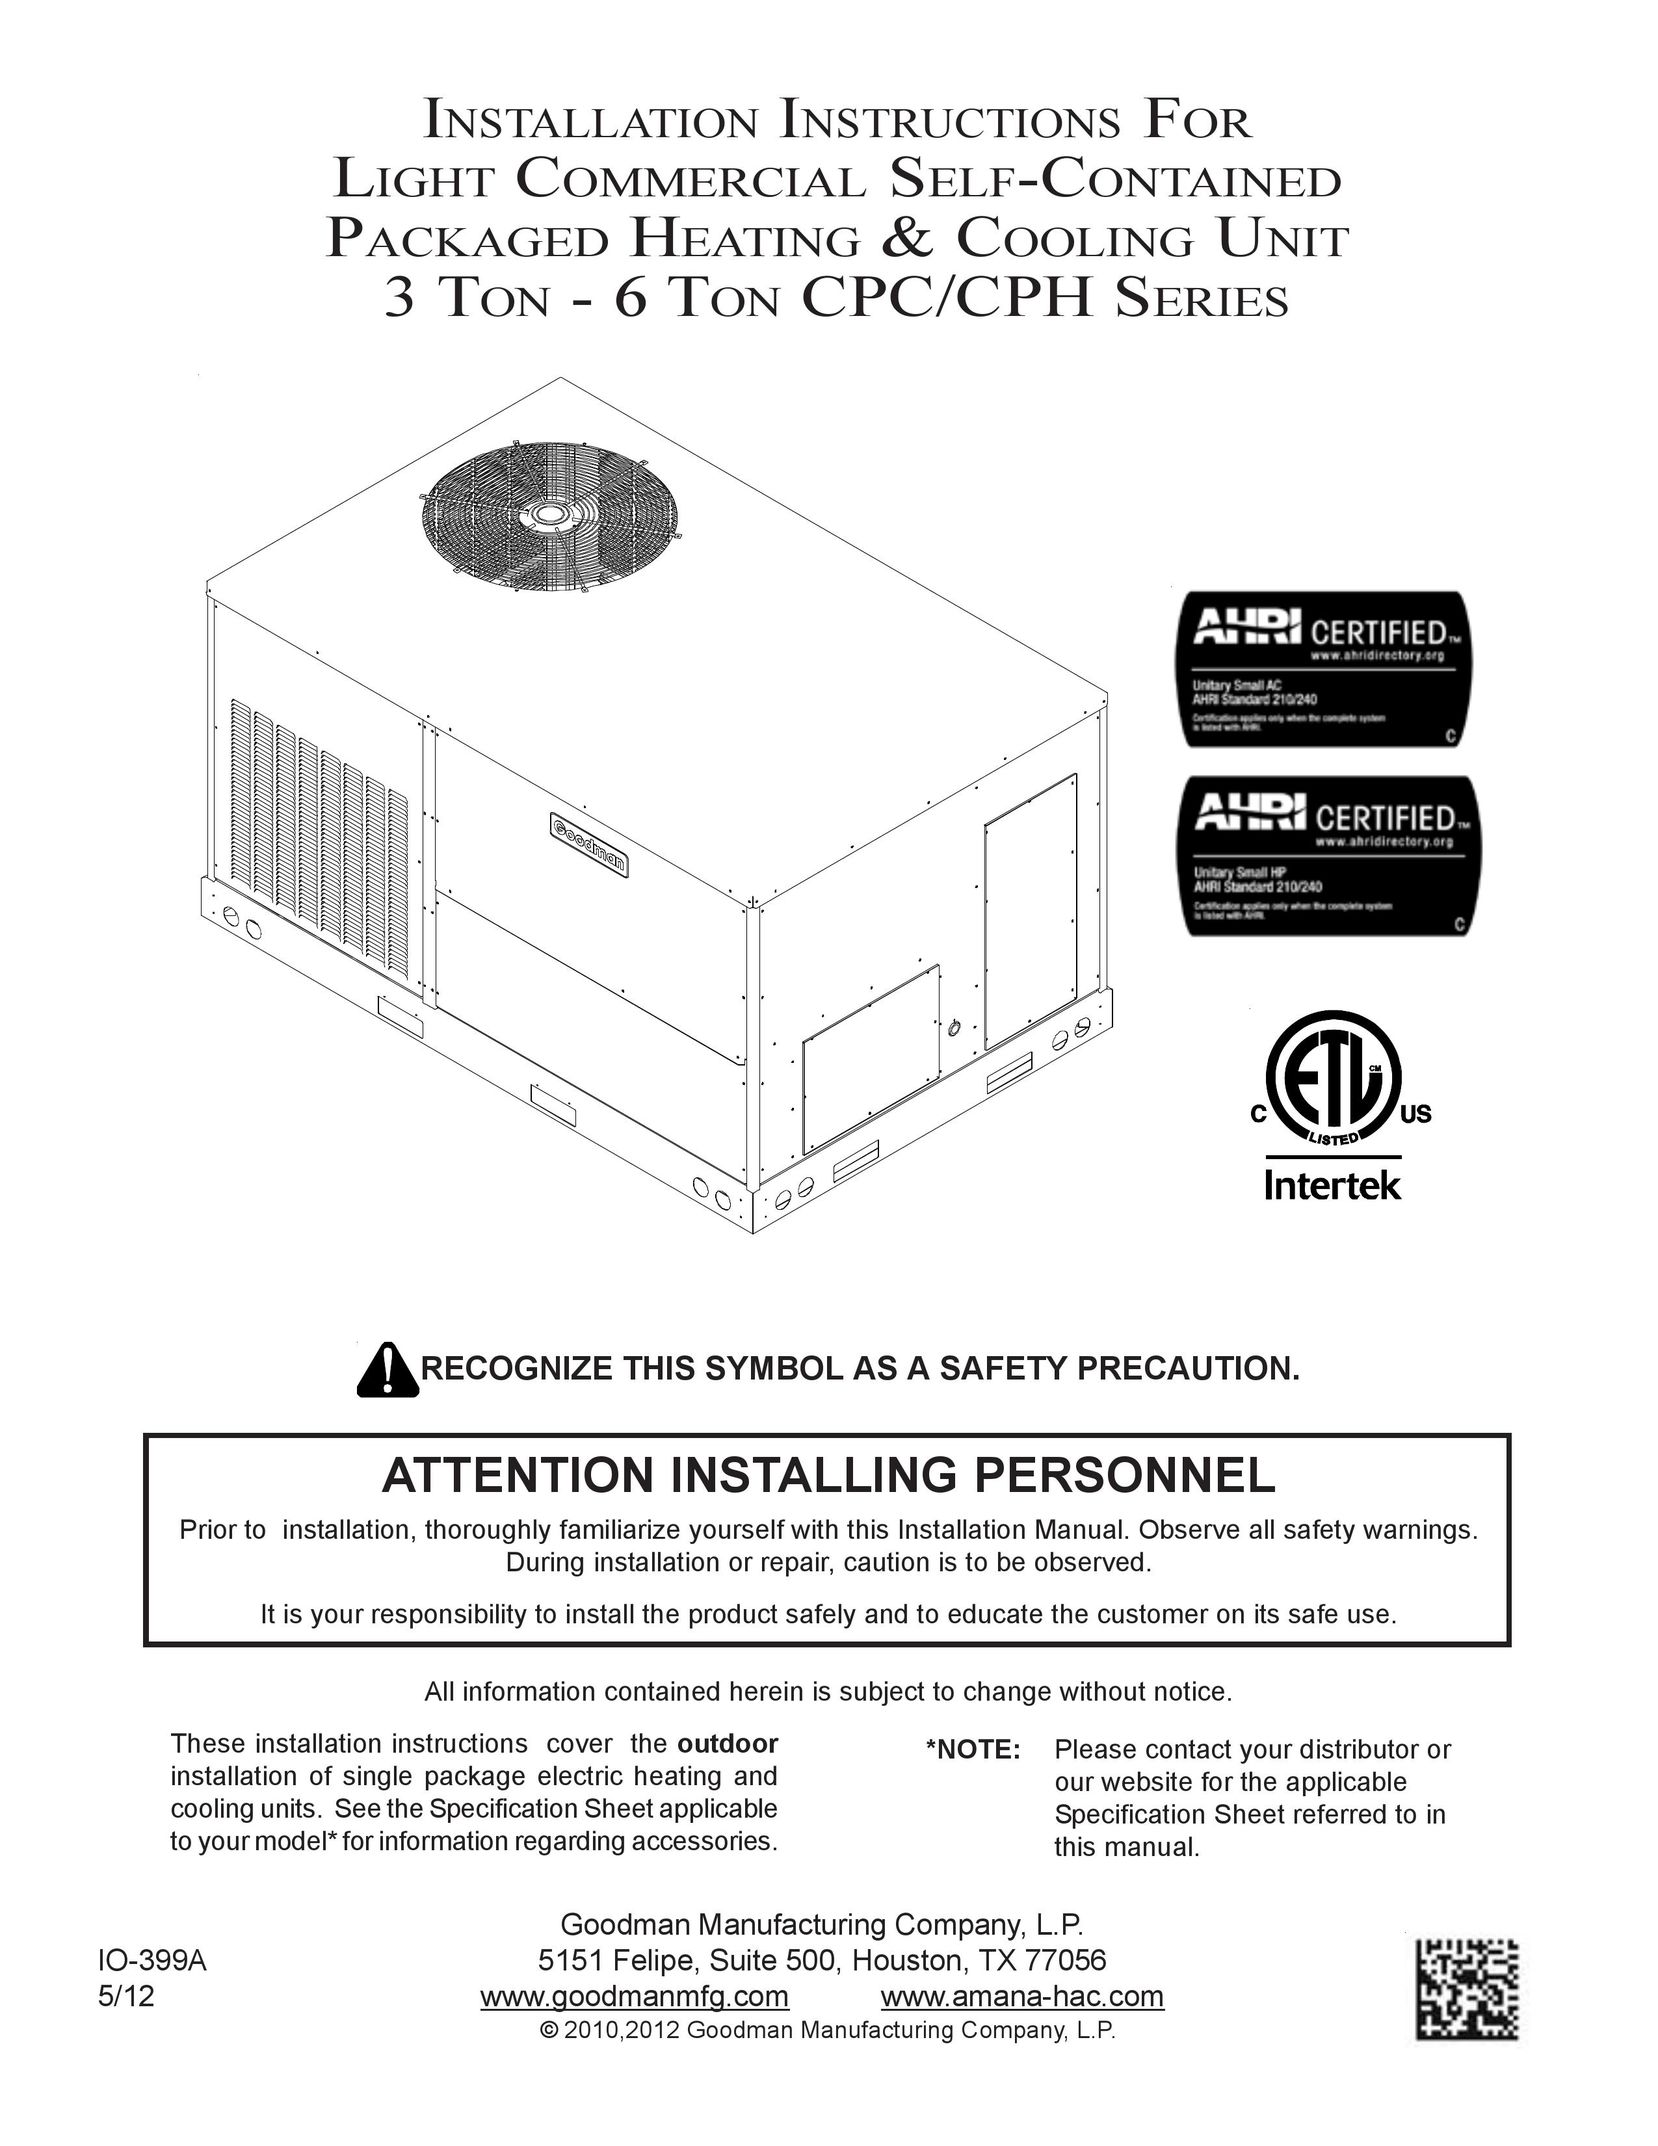 Goodman Mfg CPC/CPH Air Conditioner User Manual